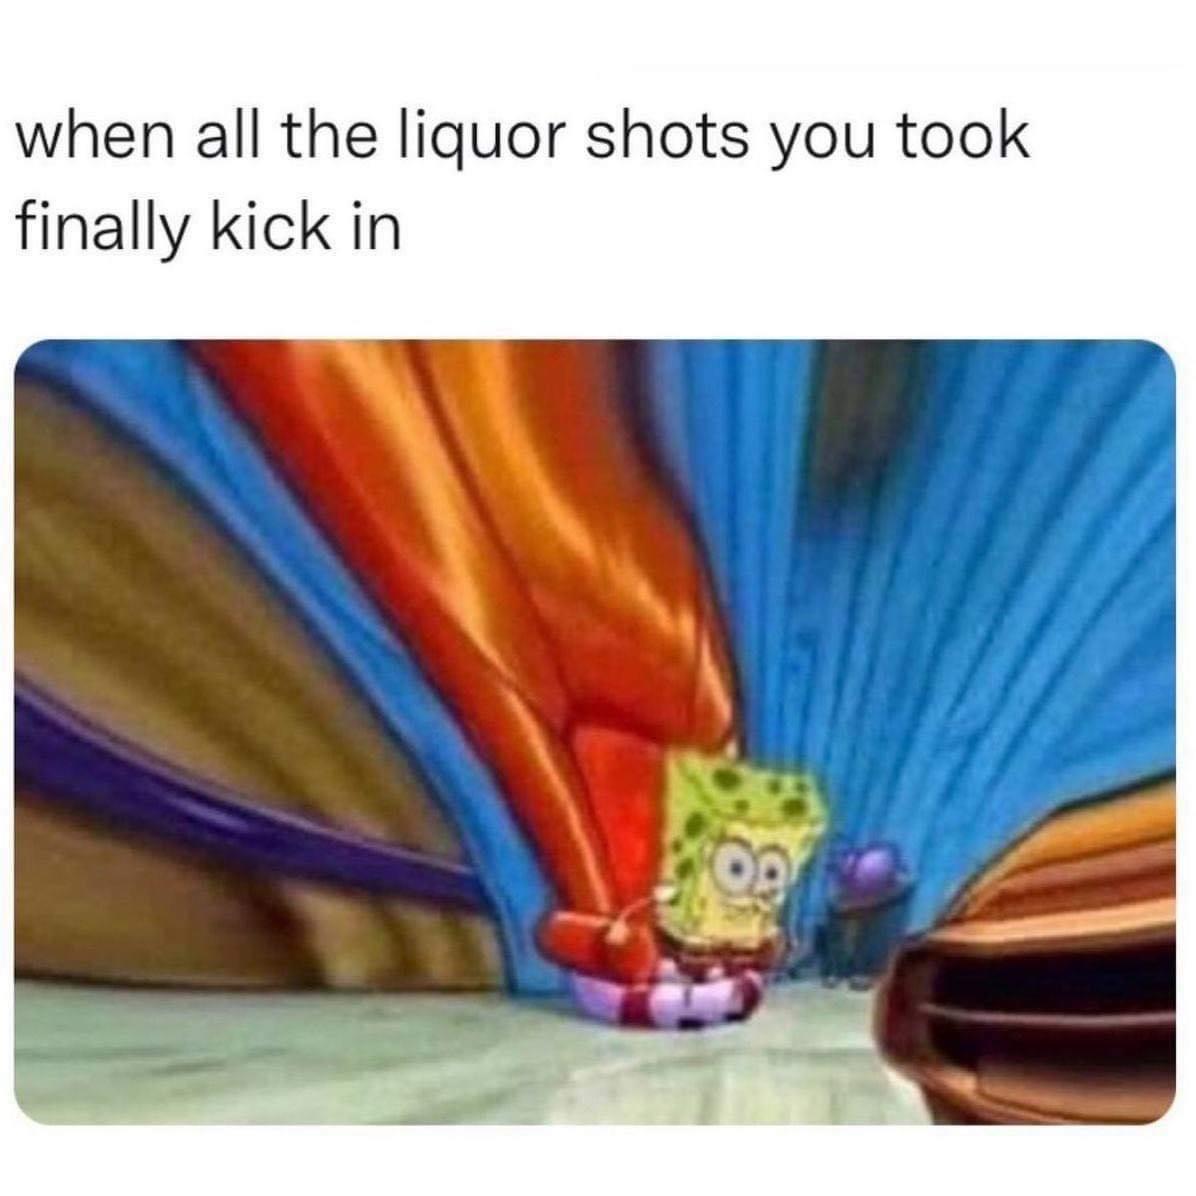 funny memes and pics - all the liquor shots finally kick - when all the liquor shots you took finally kick in